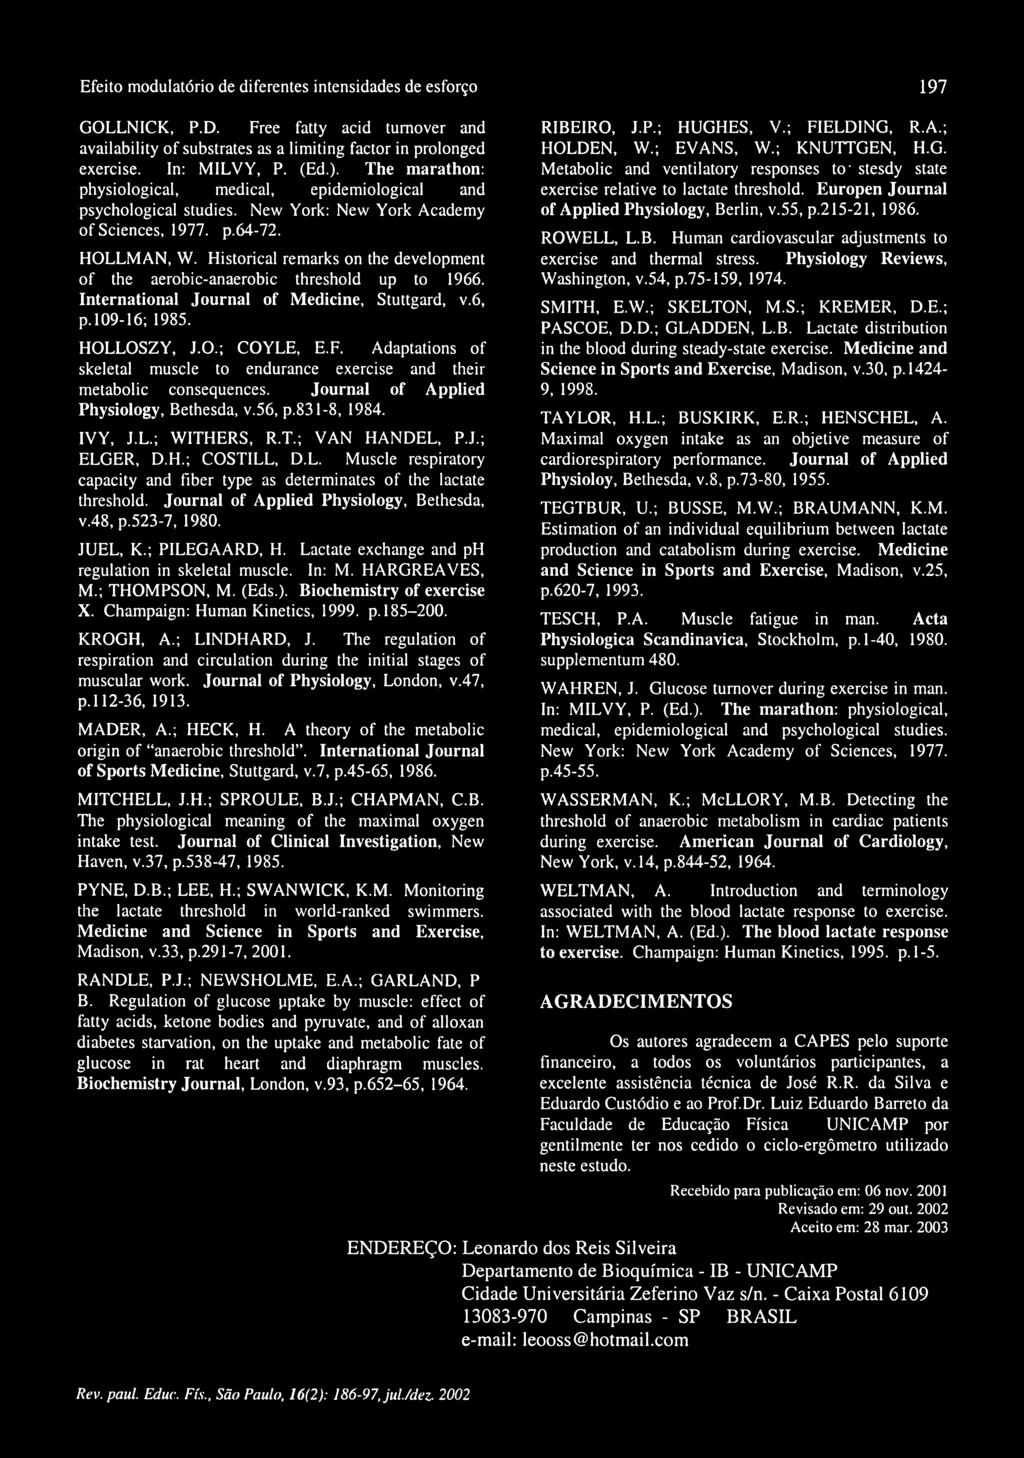 New York: New York Academy of Sciences, 1977. p.64-72. HOLLMAN, W. Historical remarks on the development of the aerobic-anaerobic threshold up to 1966. International Journal of Medicine, Stuttgard, v.